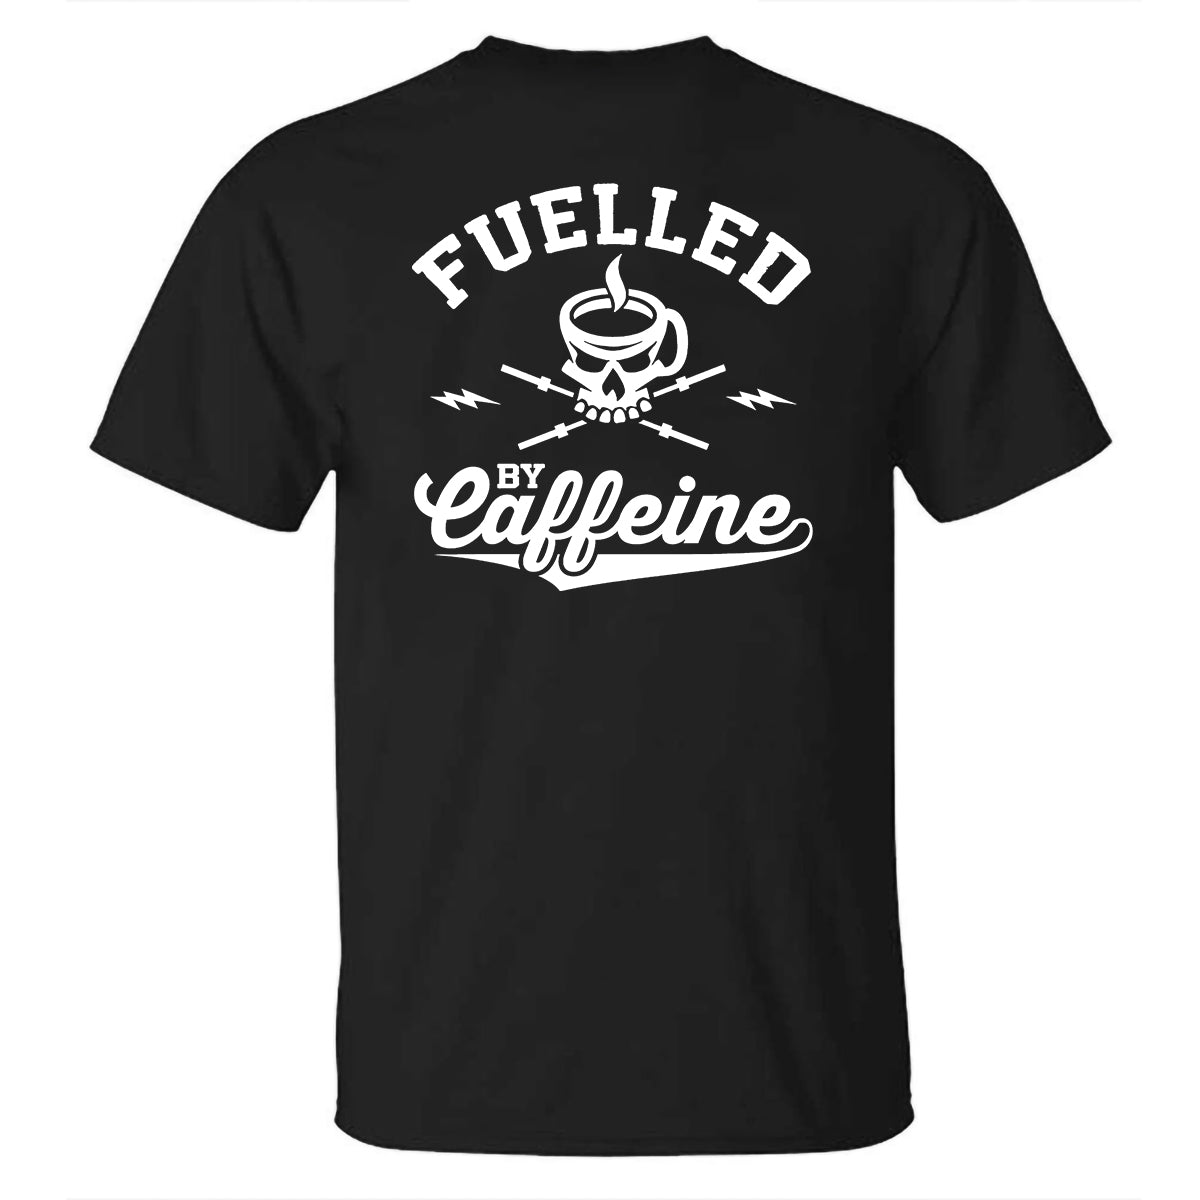 Fuelled By Caffeine Printed Men's T-shirt